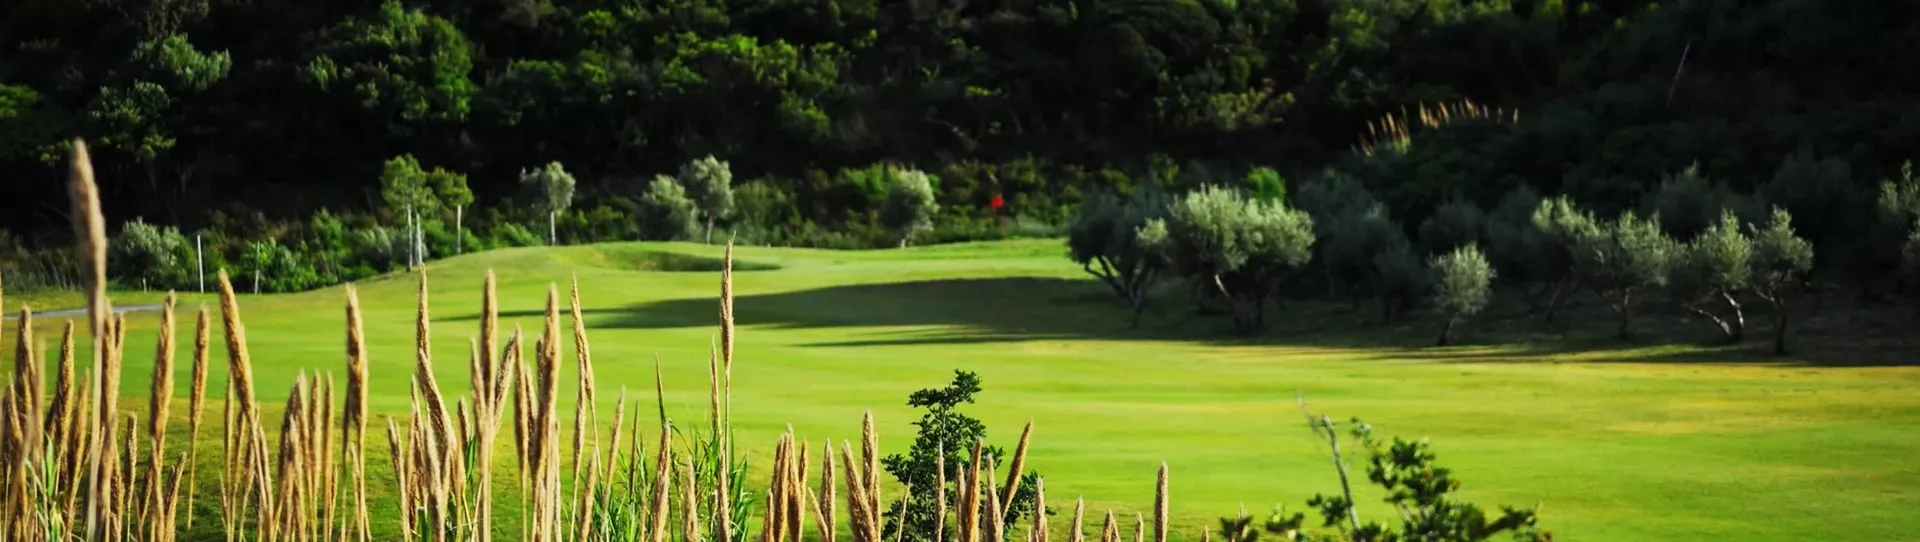 Spain golf courses - Club de Golf Casares Costa - Photo 1